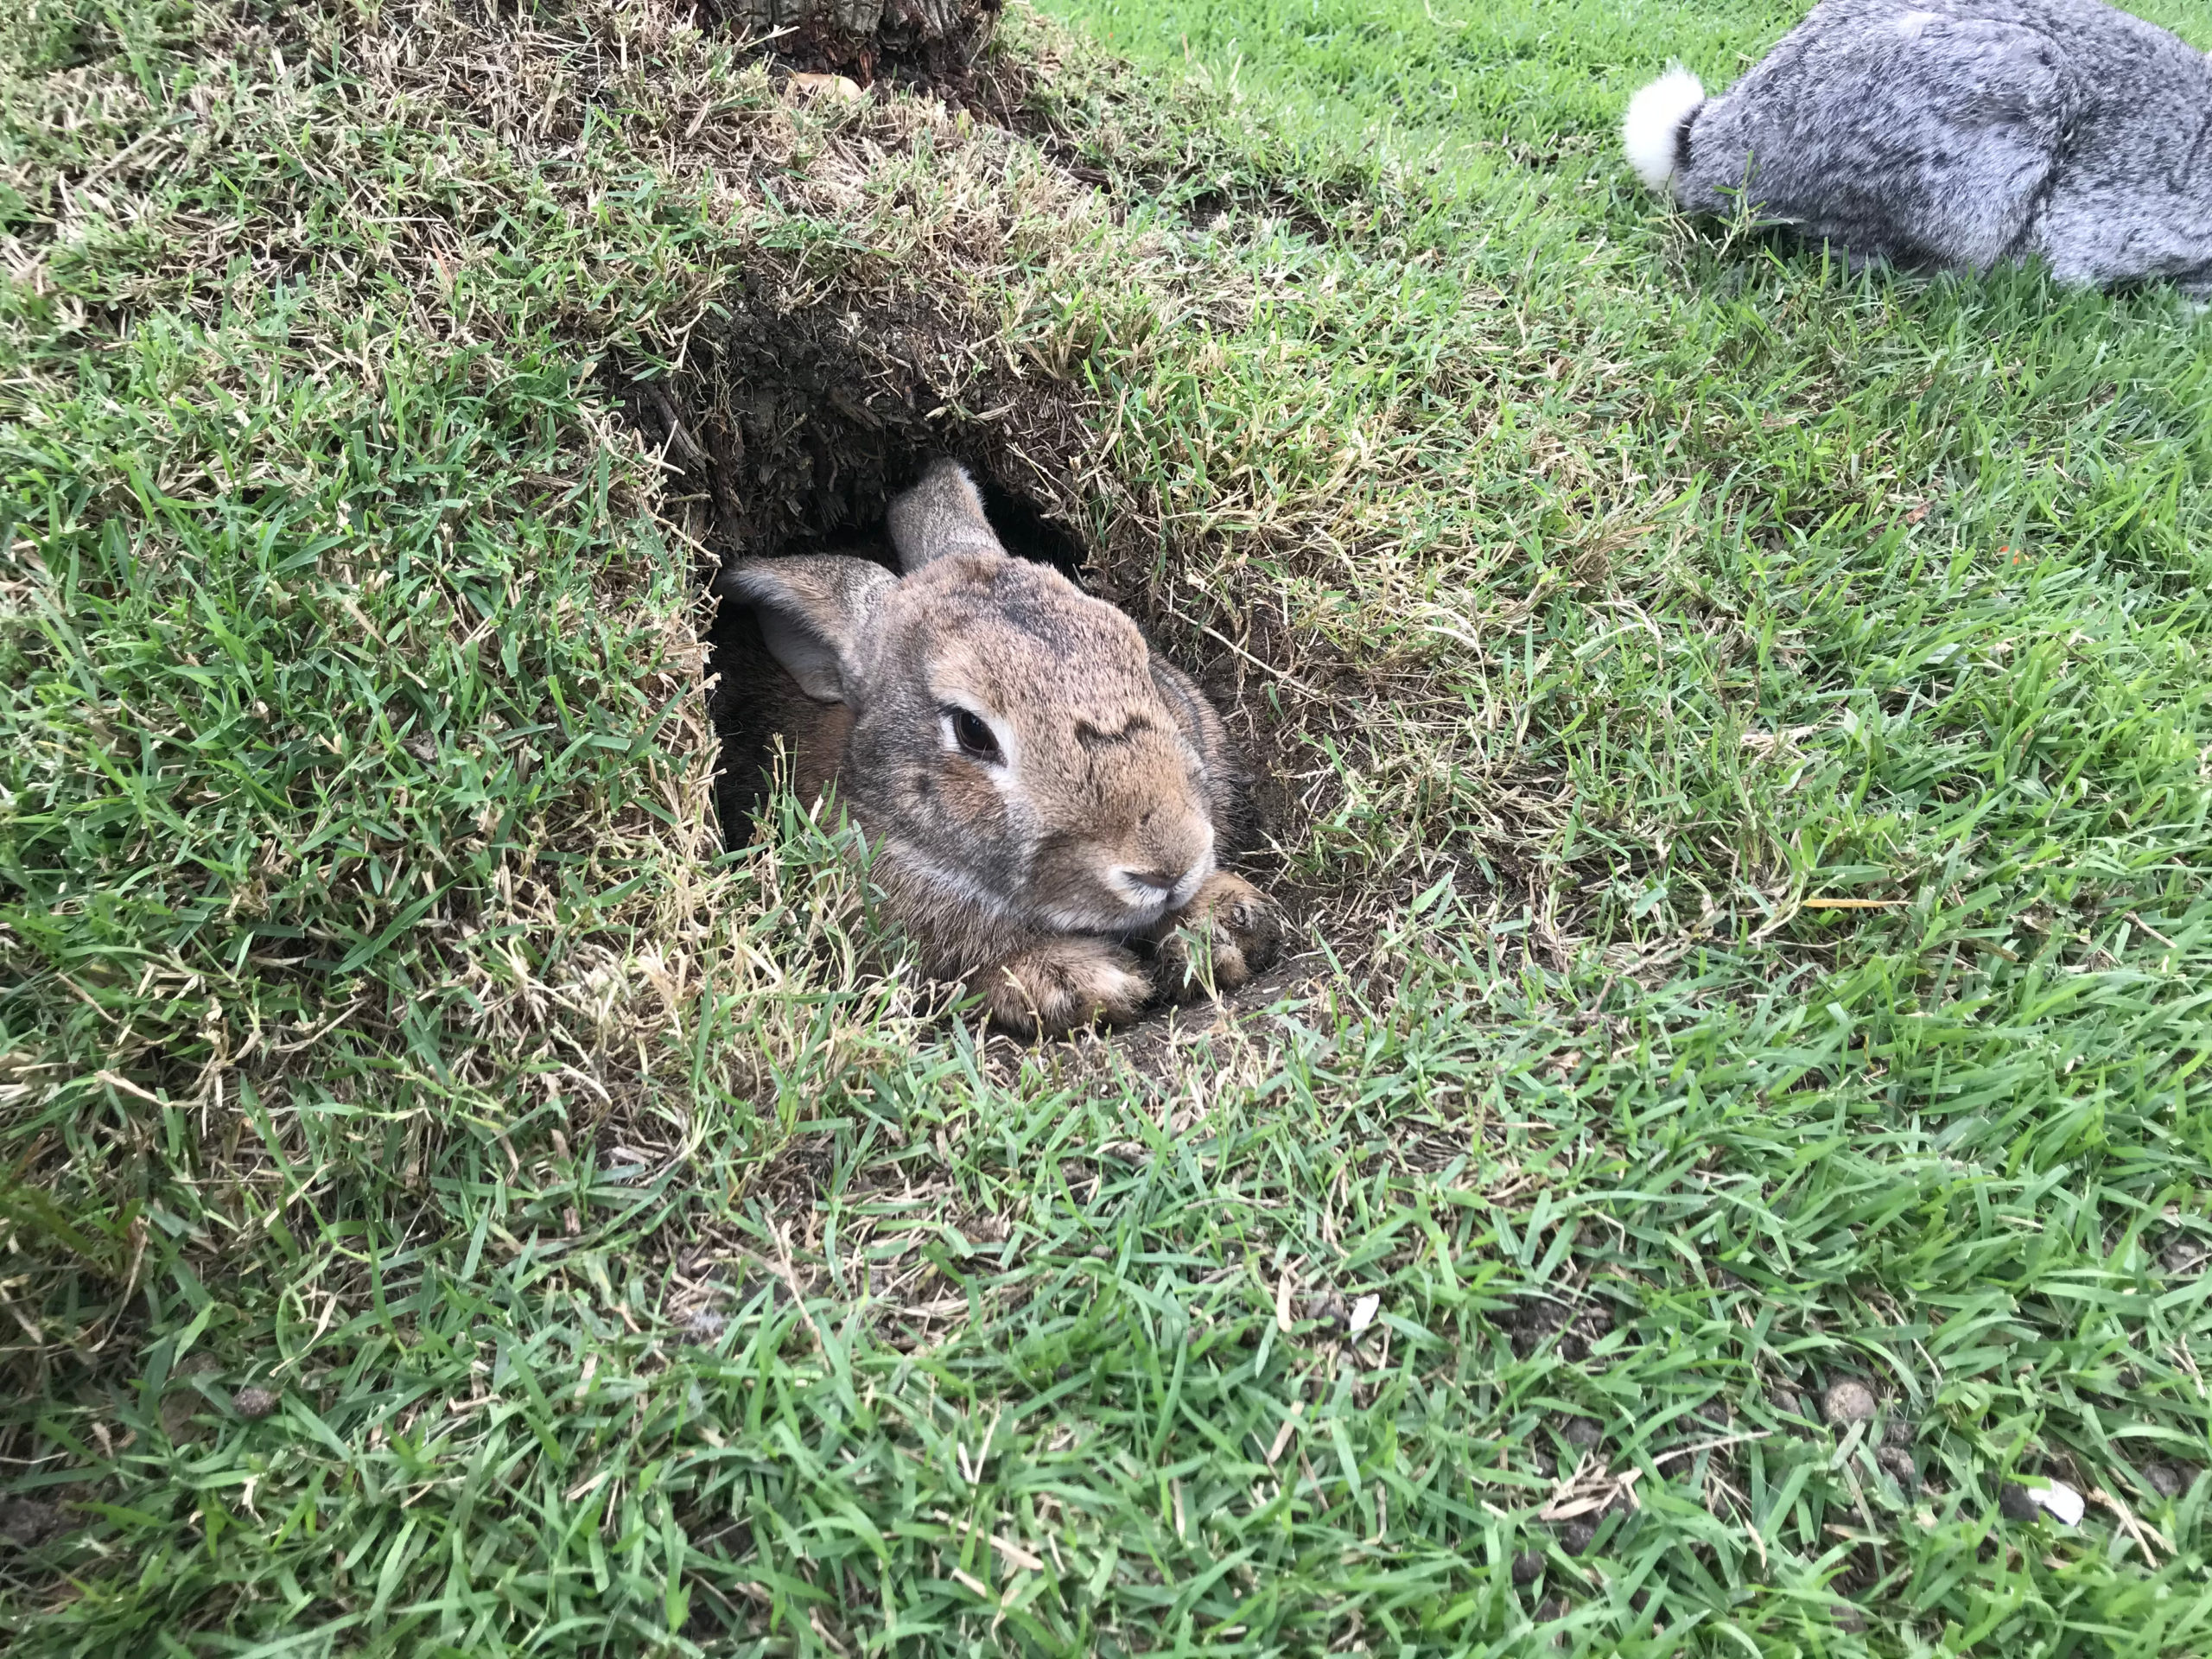 Rabbit peeking out of burrow